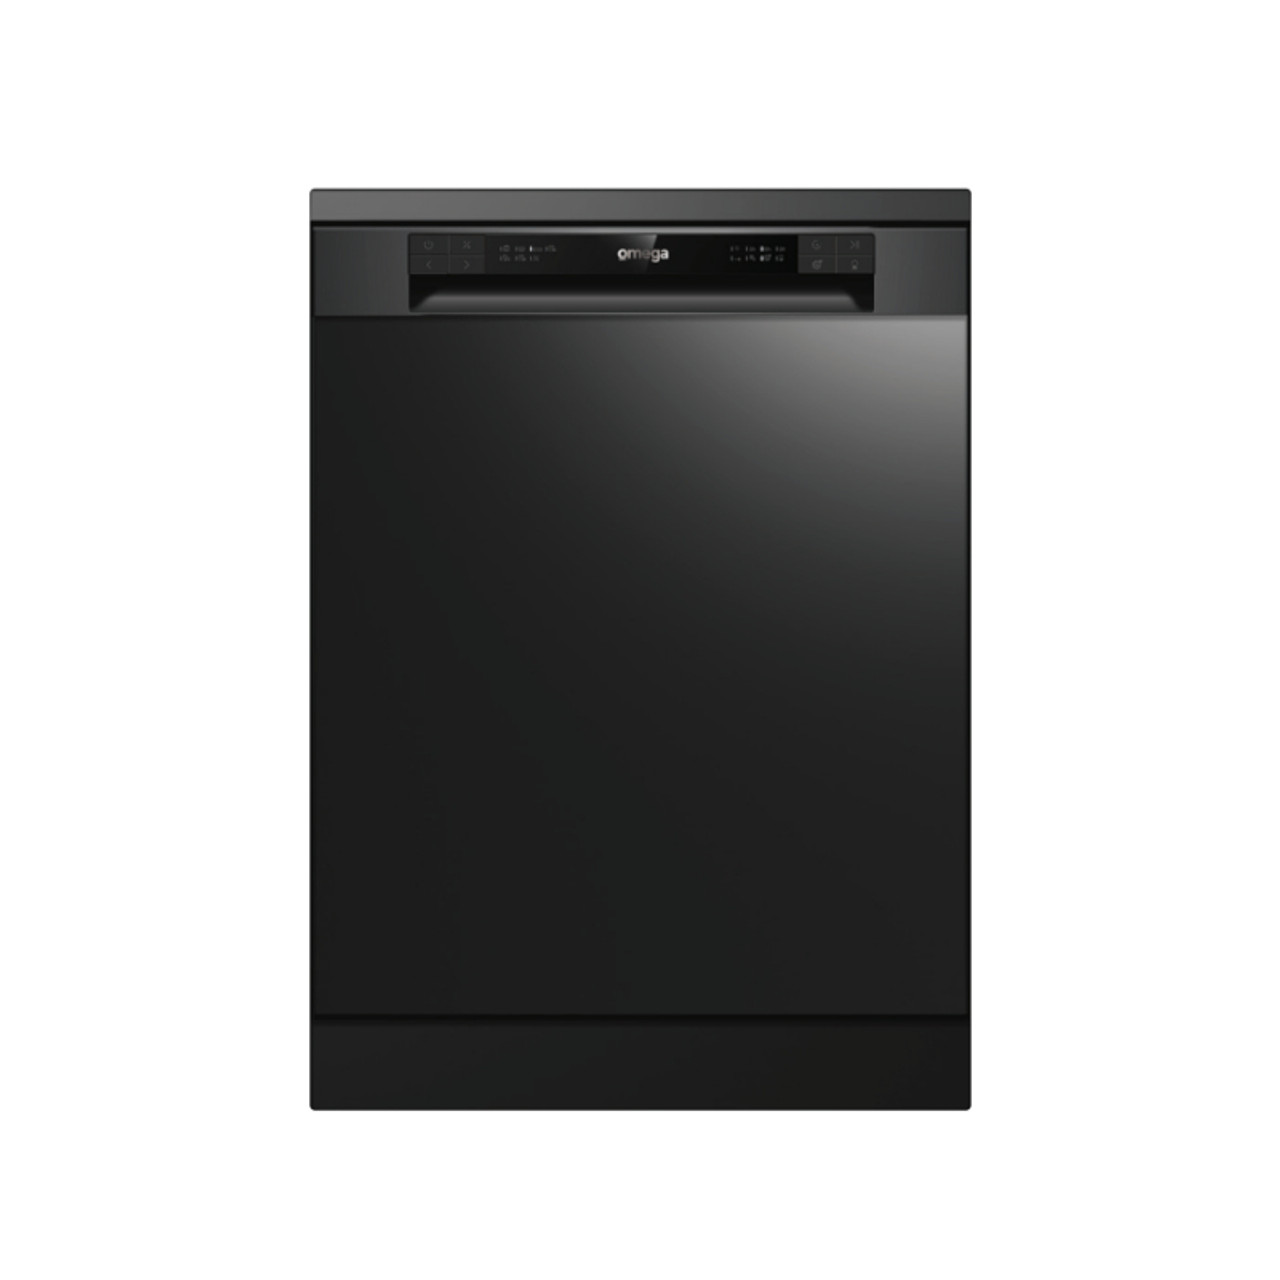 ODWF6014BX -  60cm Freestanding Dishwasher Black Stainless Steel - Black